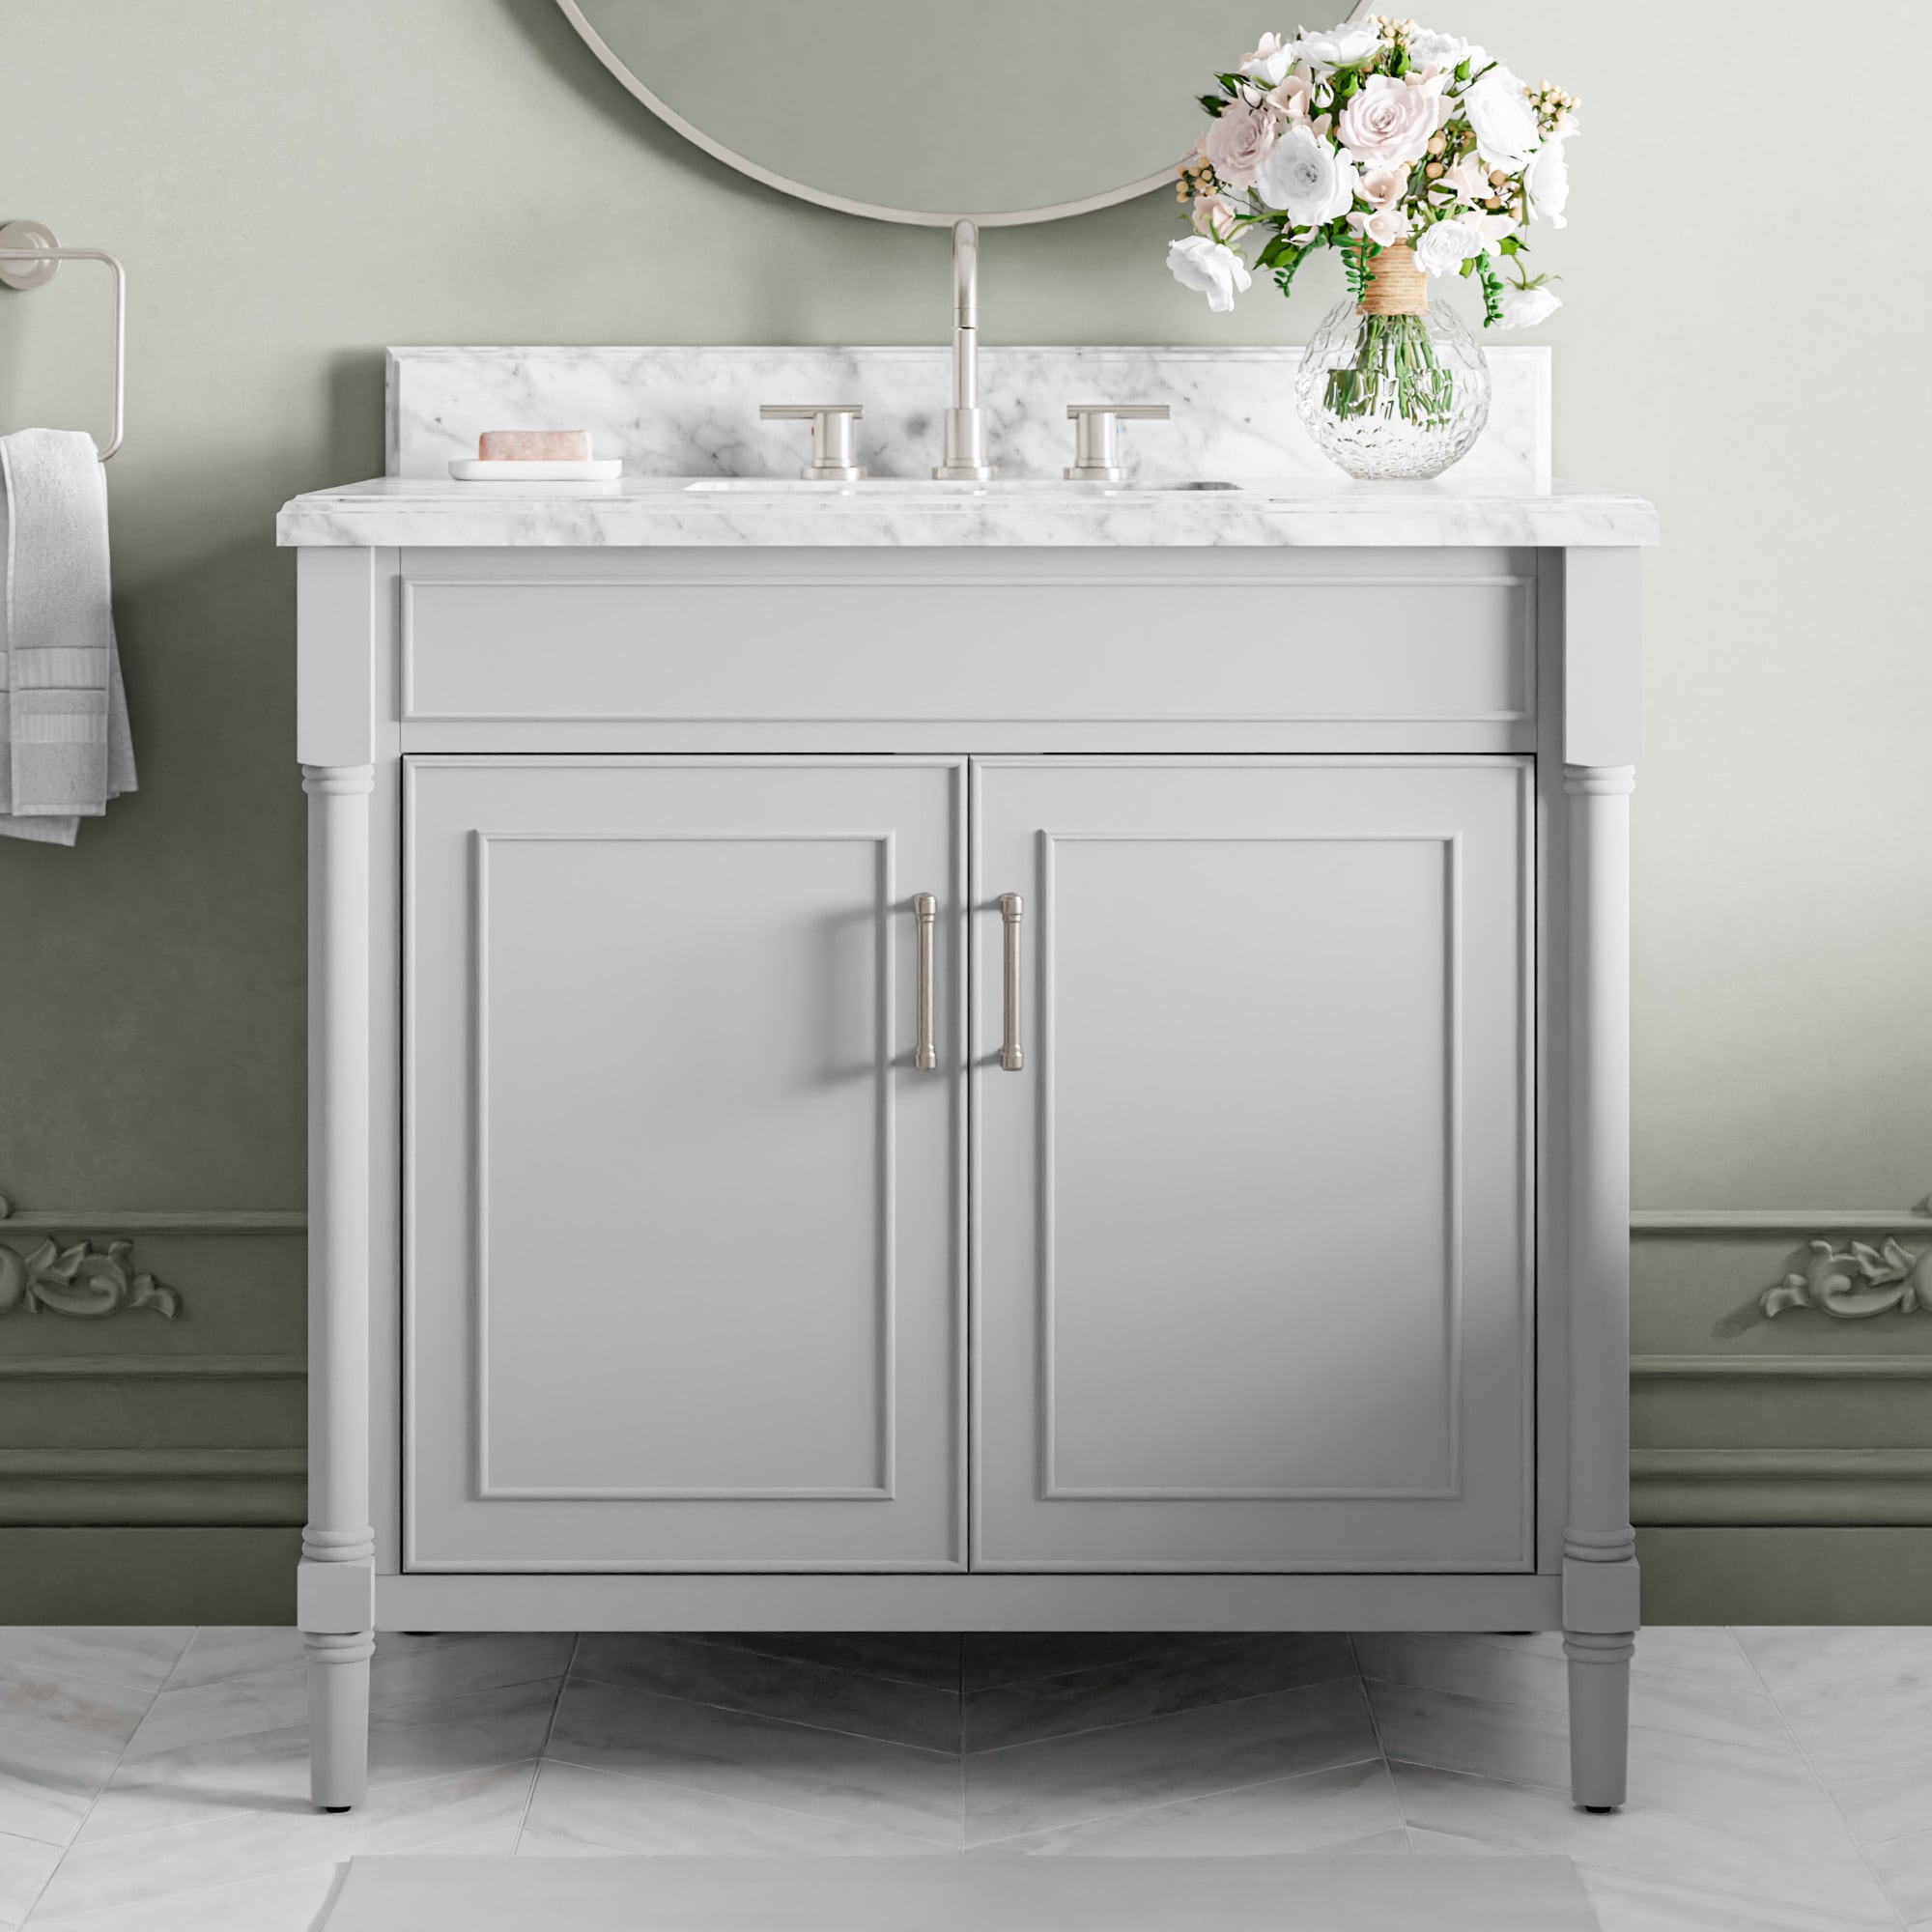 Perrella 37-in Light Gray Undermount Single Sink Bathroom Vanity with Carrara Natural Marble Top | - allen + roth 2543VA-37-343-900L